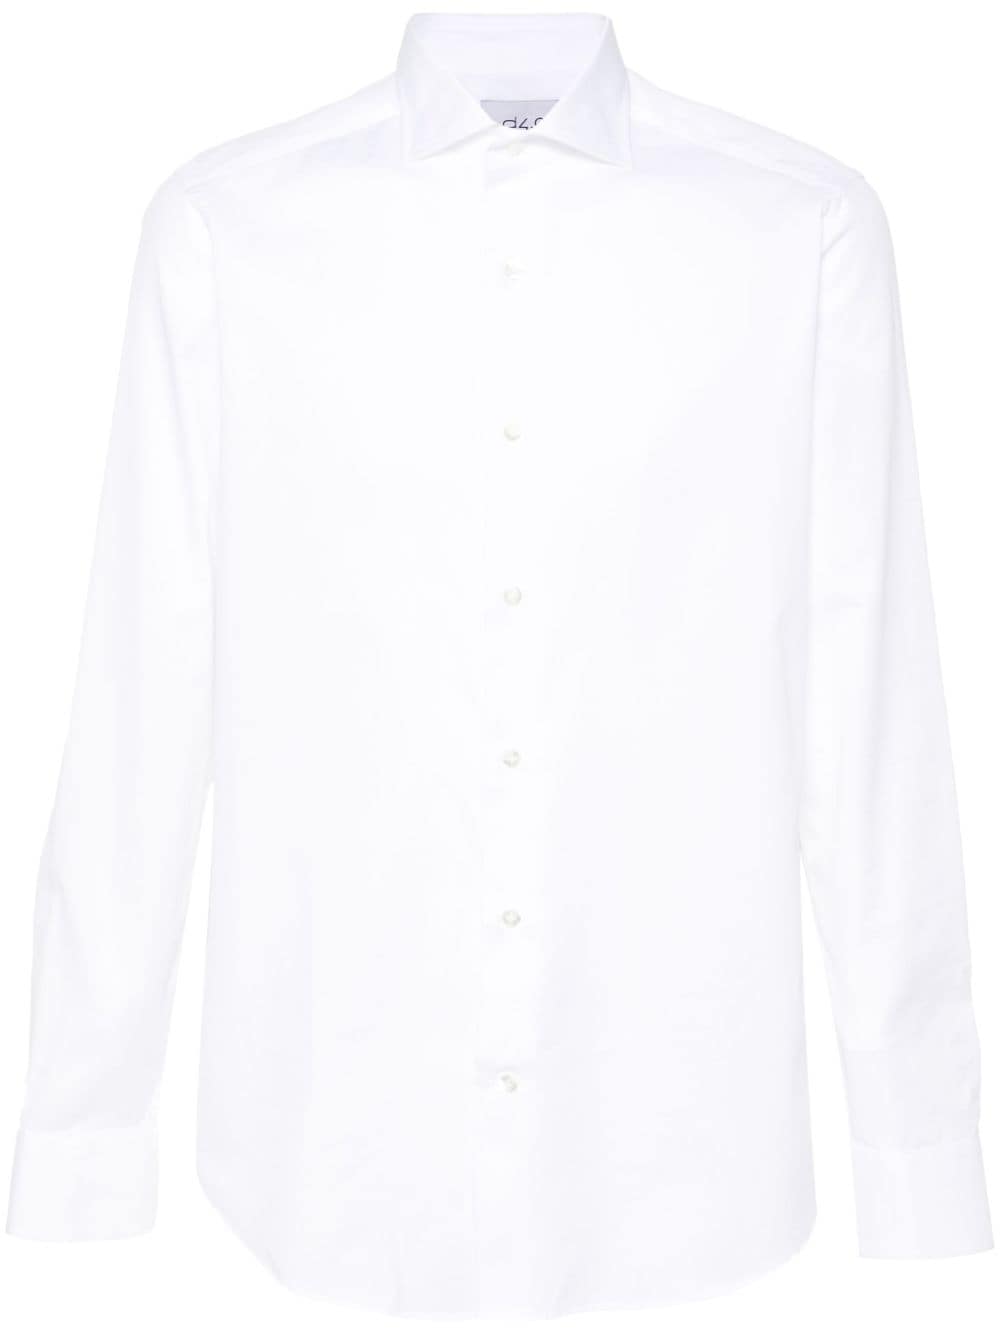 D4.0 plain cotton shirt - White